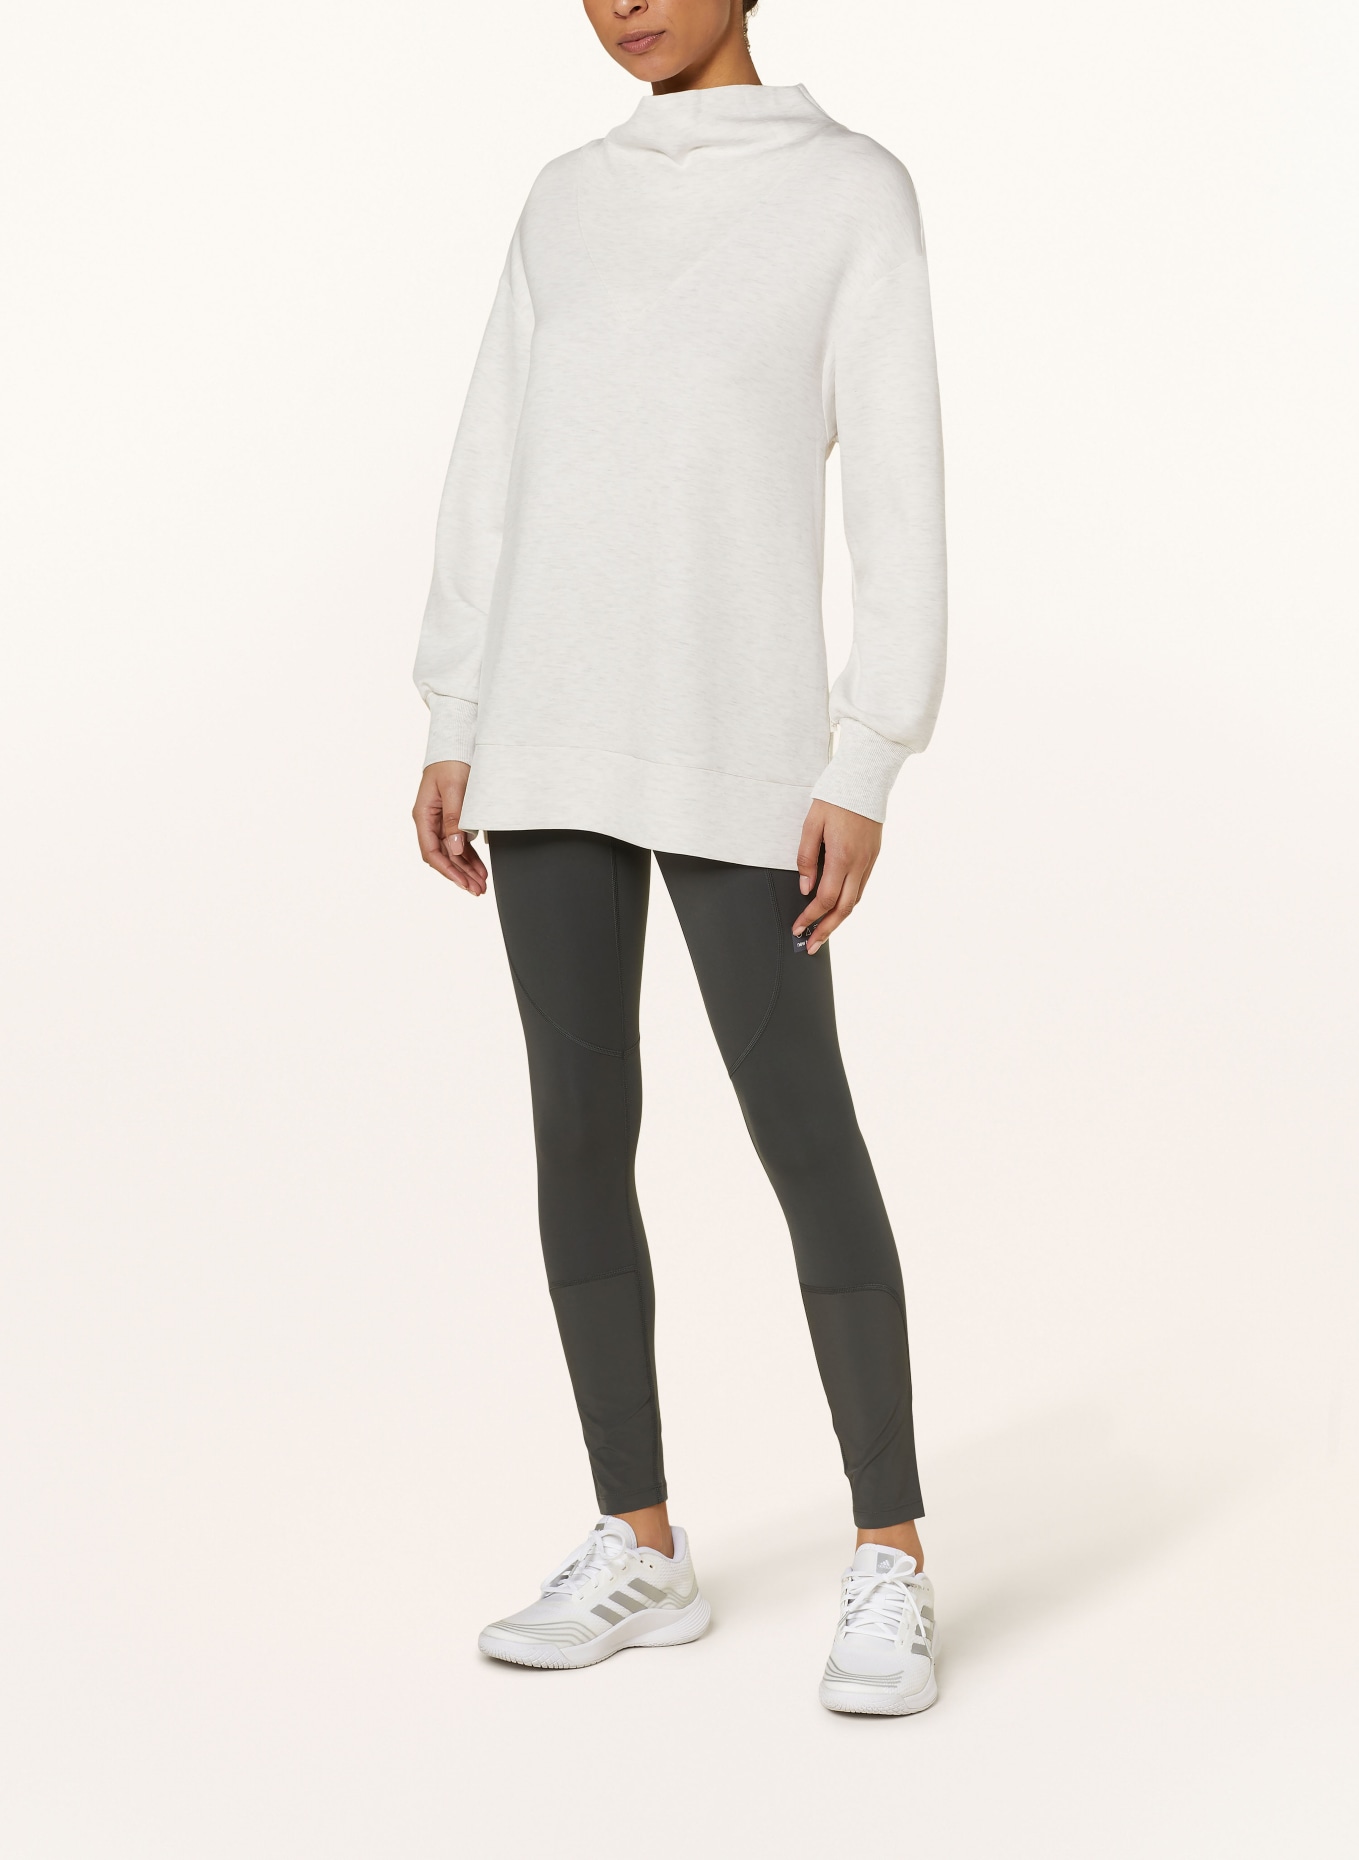 VARLEY Sweatshirt MODENA, Color: LIGHT GRAY (Image 2)